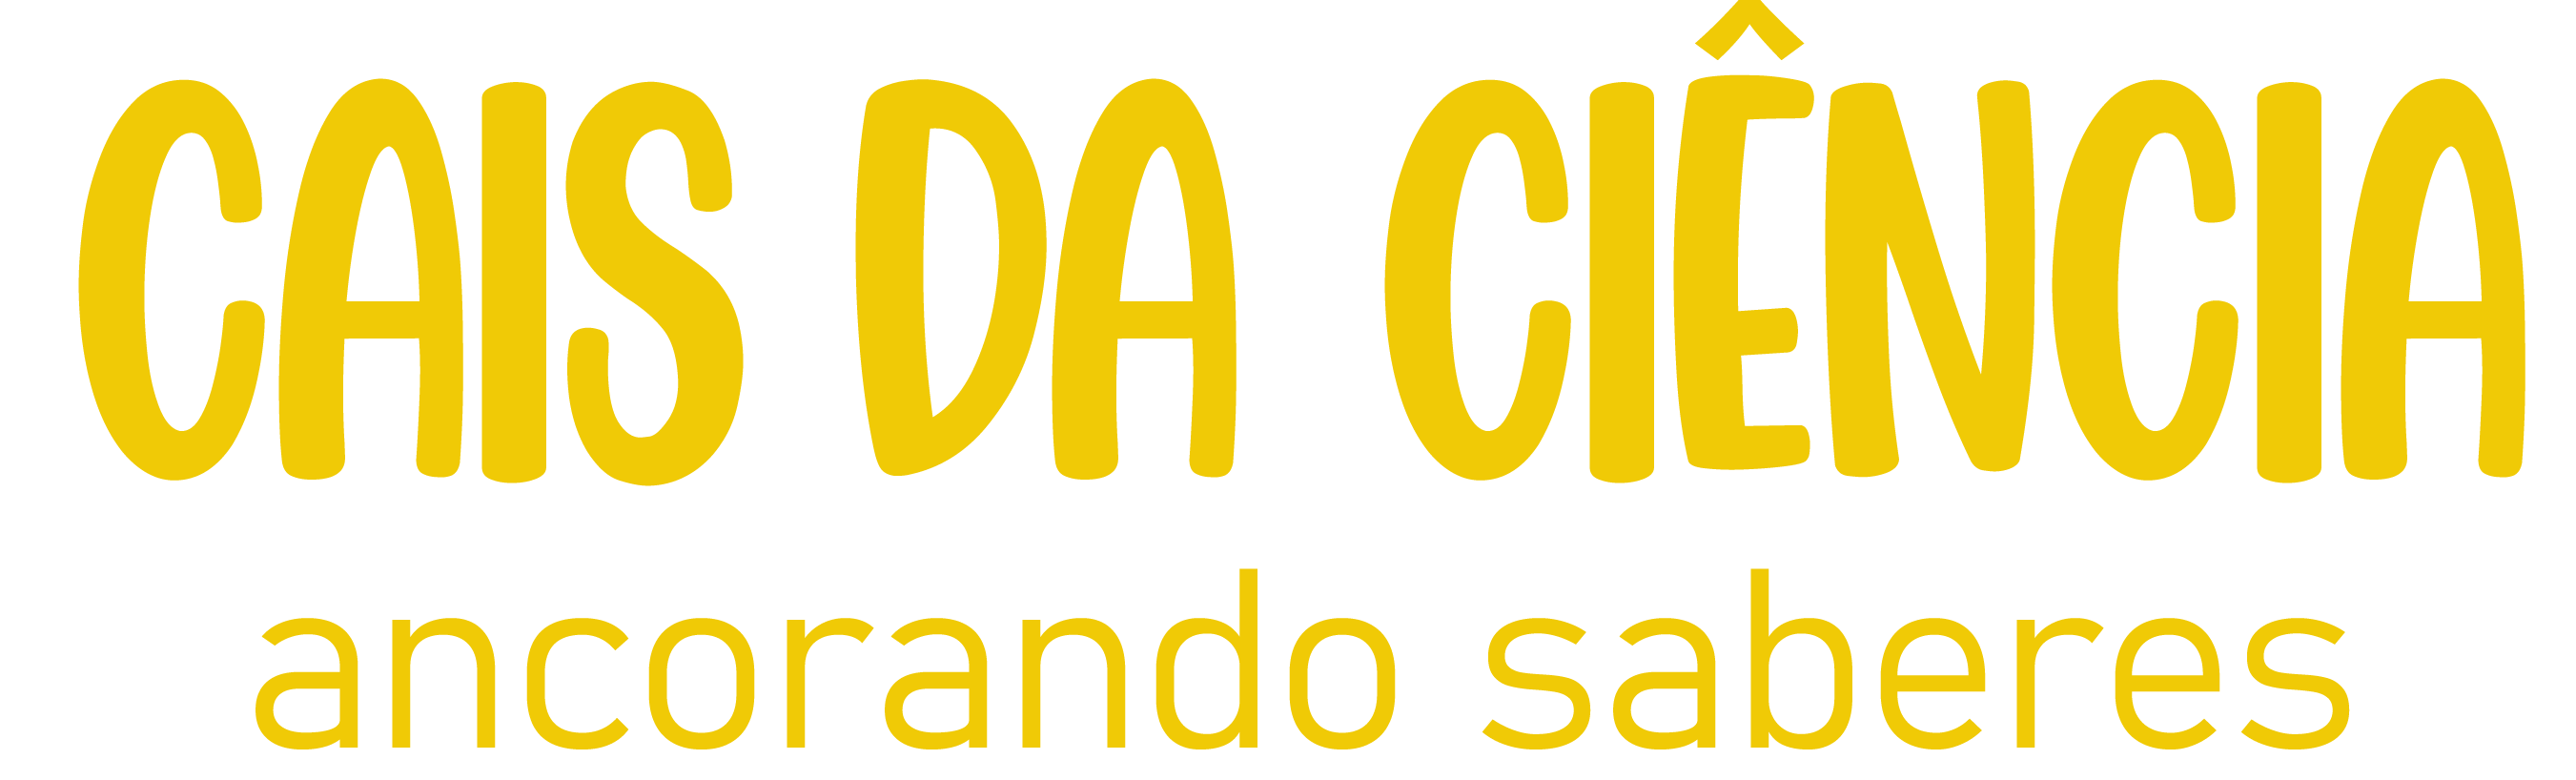 Logo-Cais-da-Ciencia-vetorizada-1.png